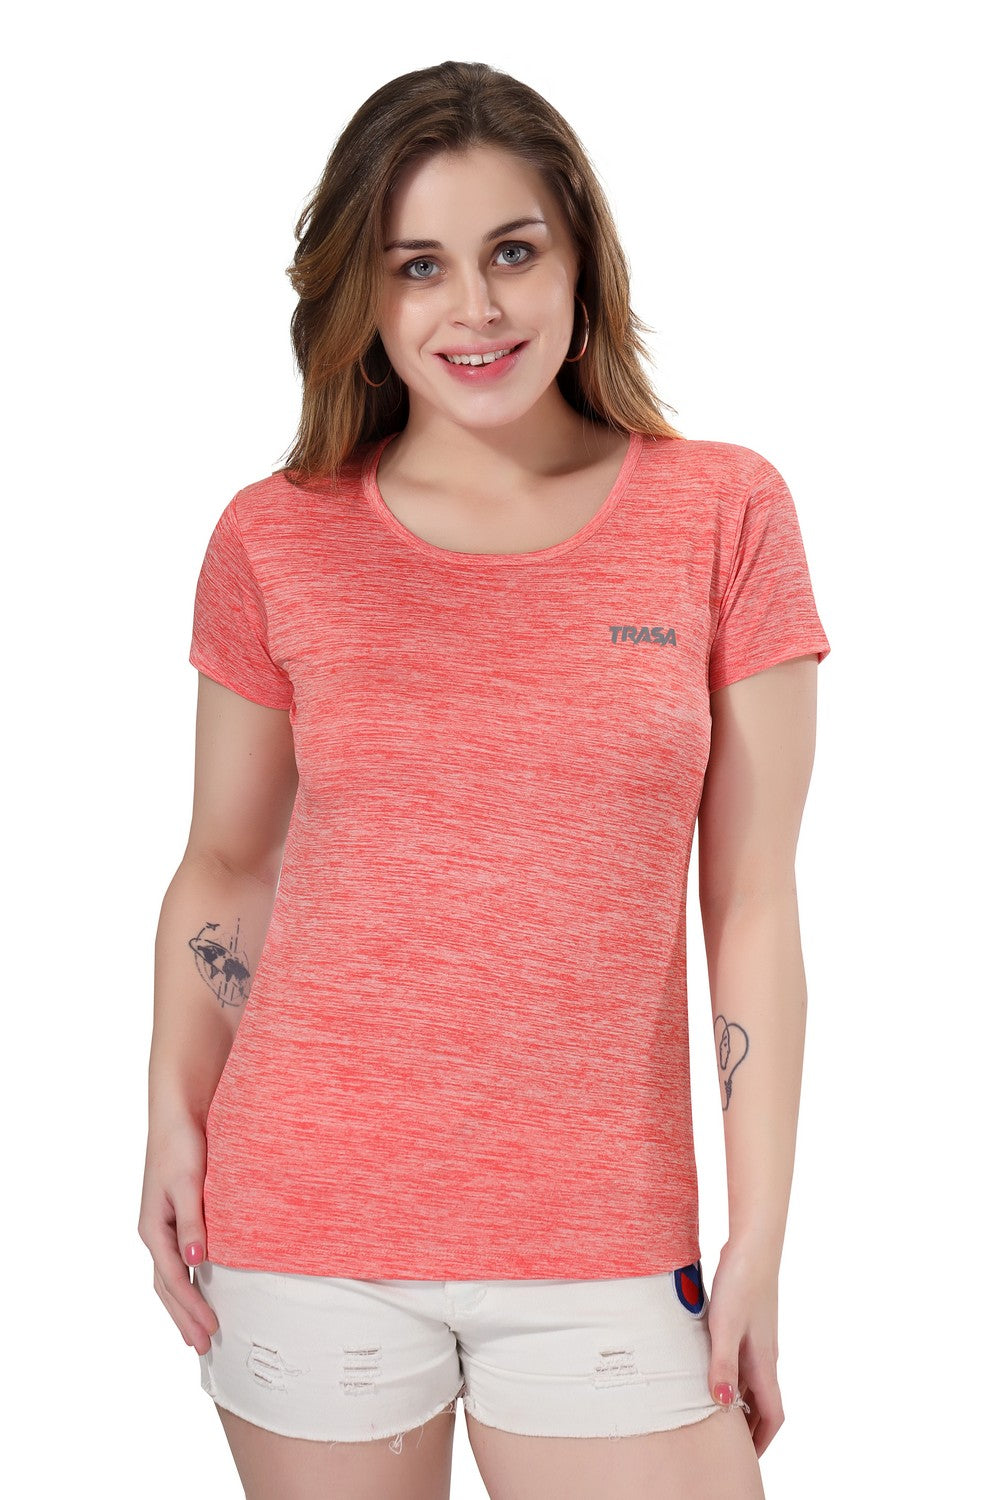 TRASA Women's Gym Sports Western Wear T-Shirt - Orange –